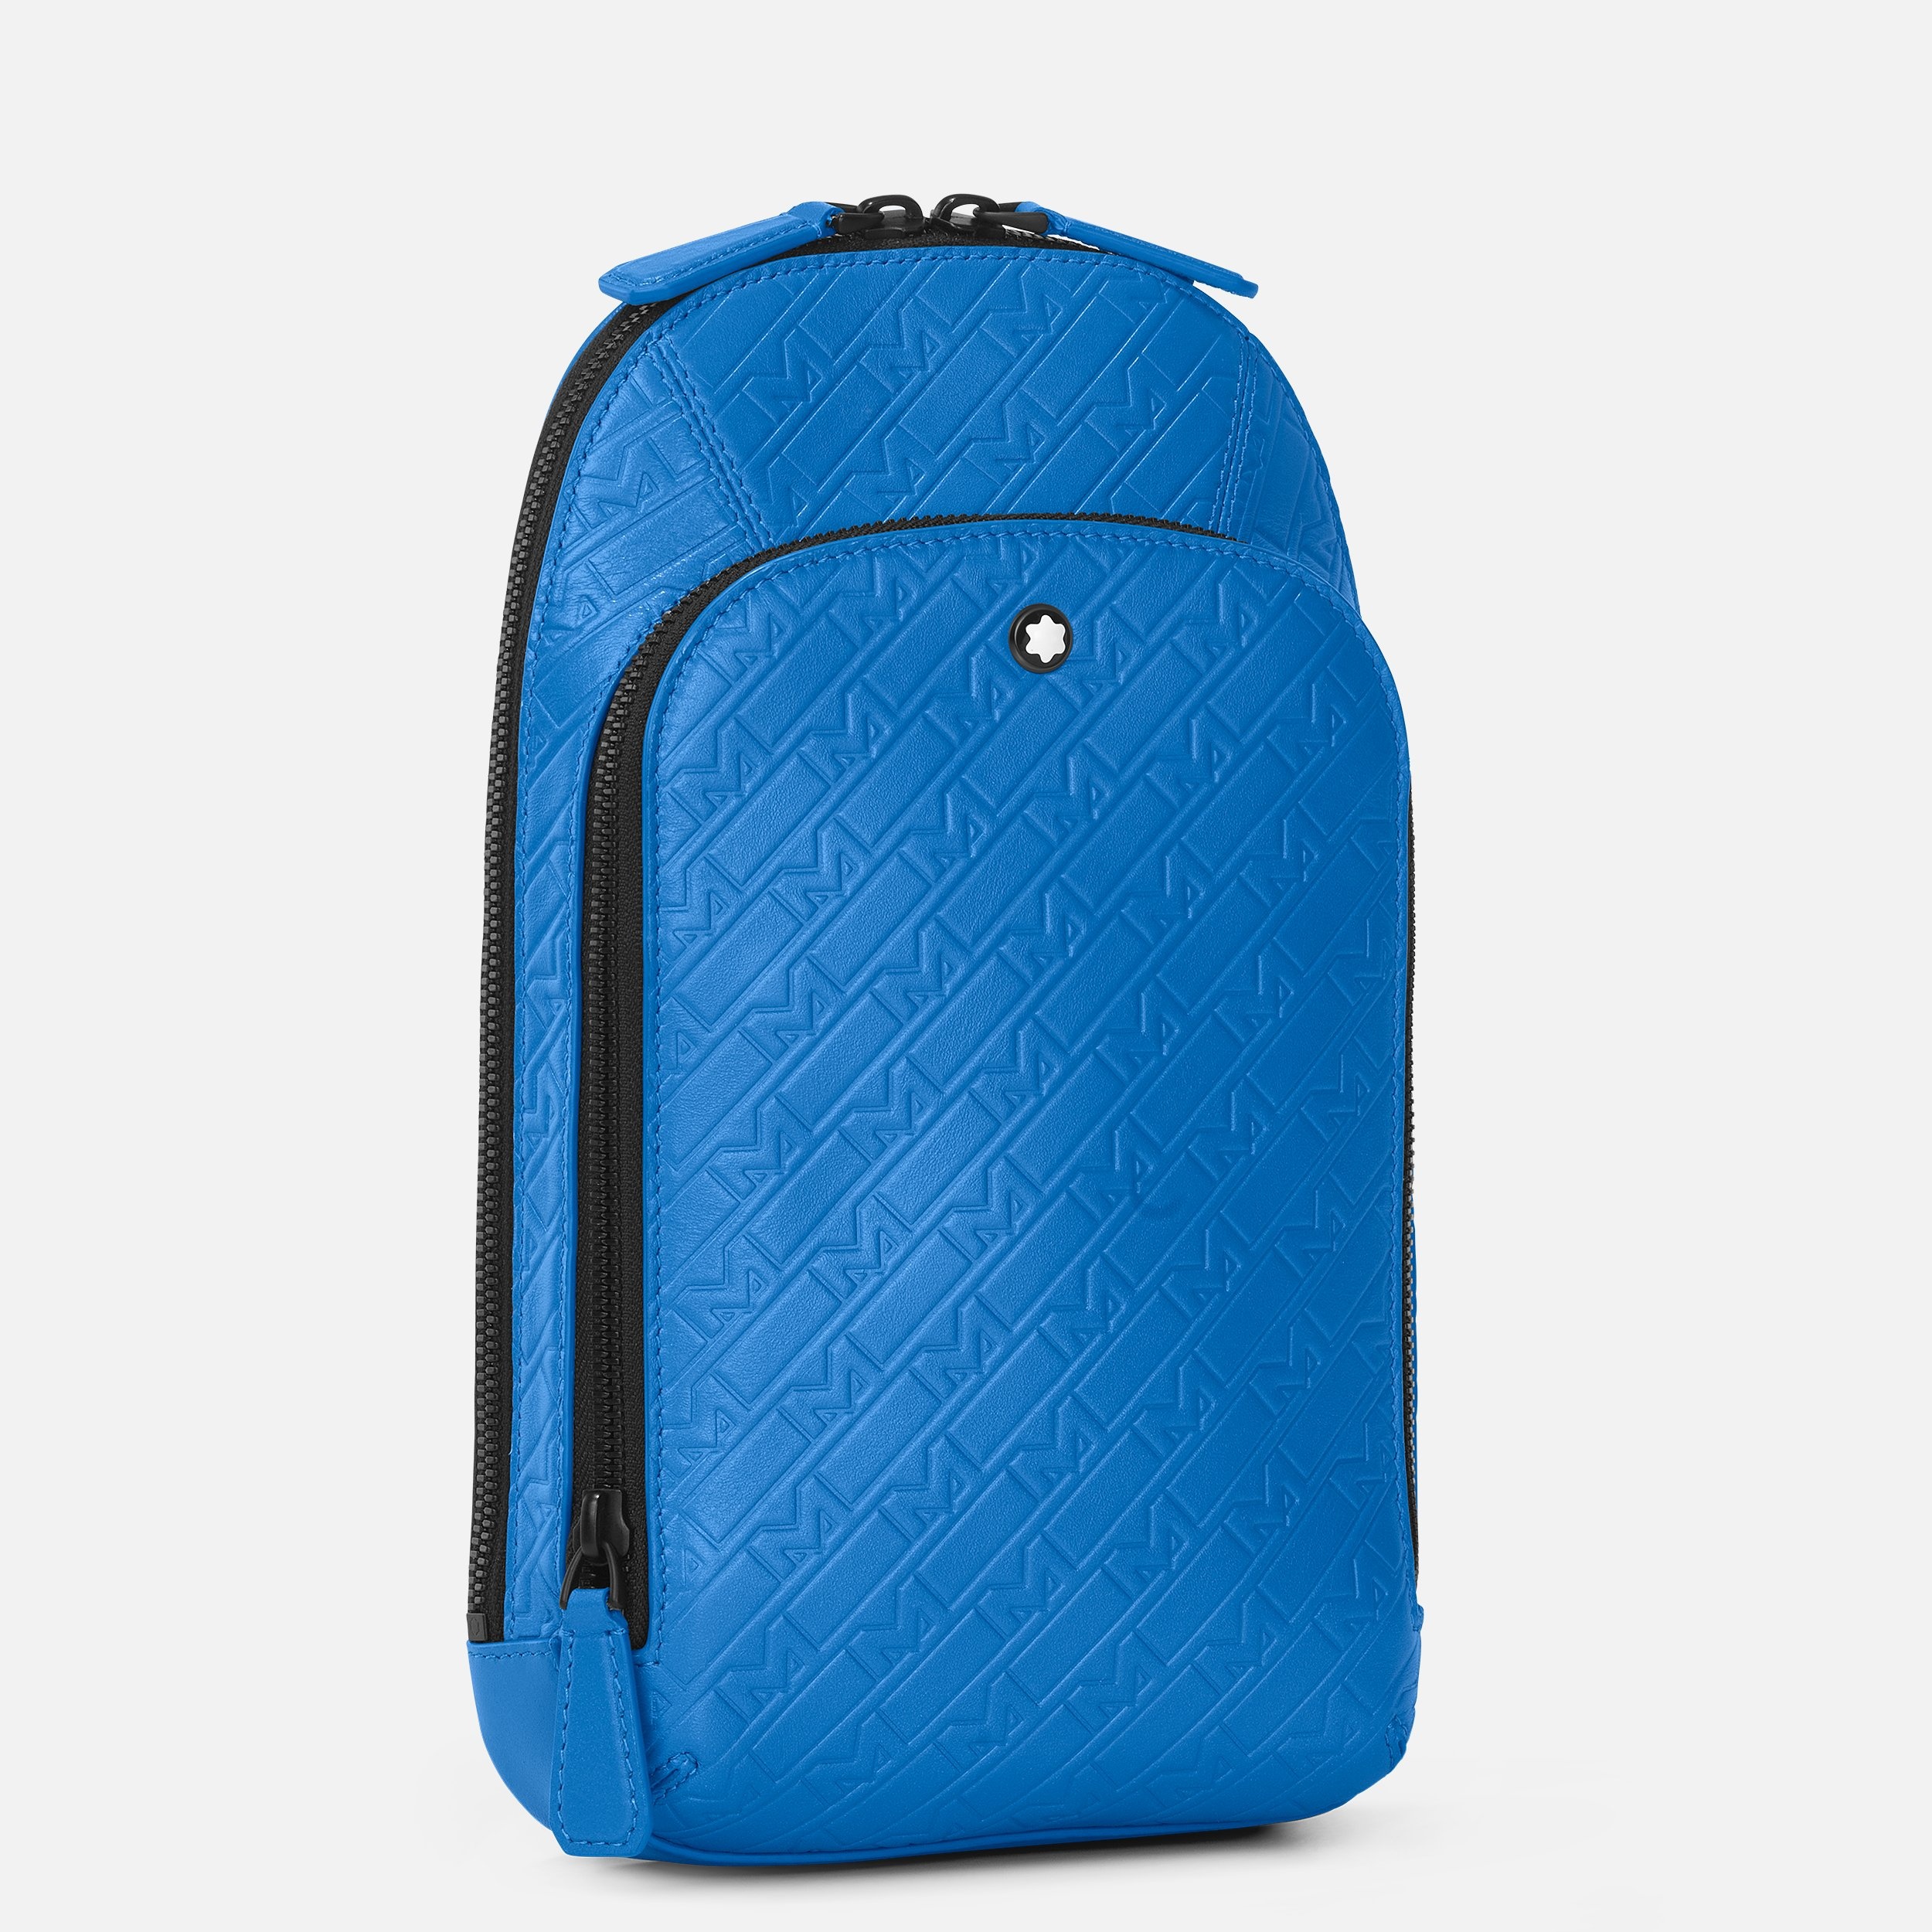 Montblanc M_Gram 4810 sling bag - 2